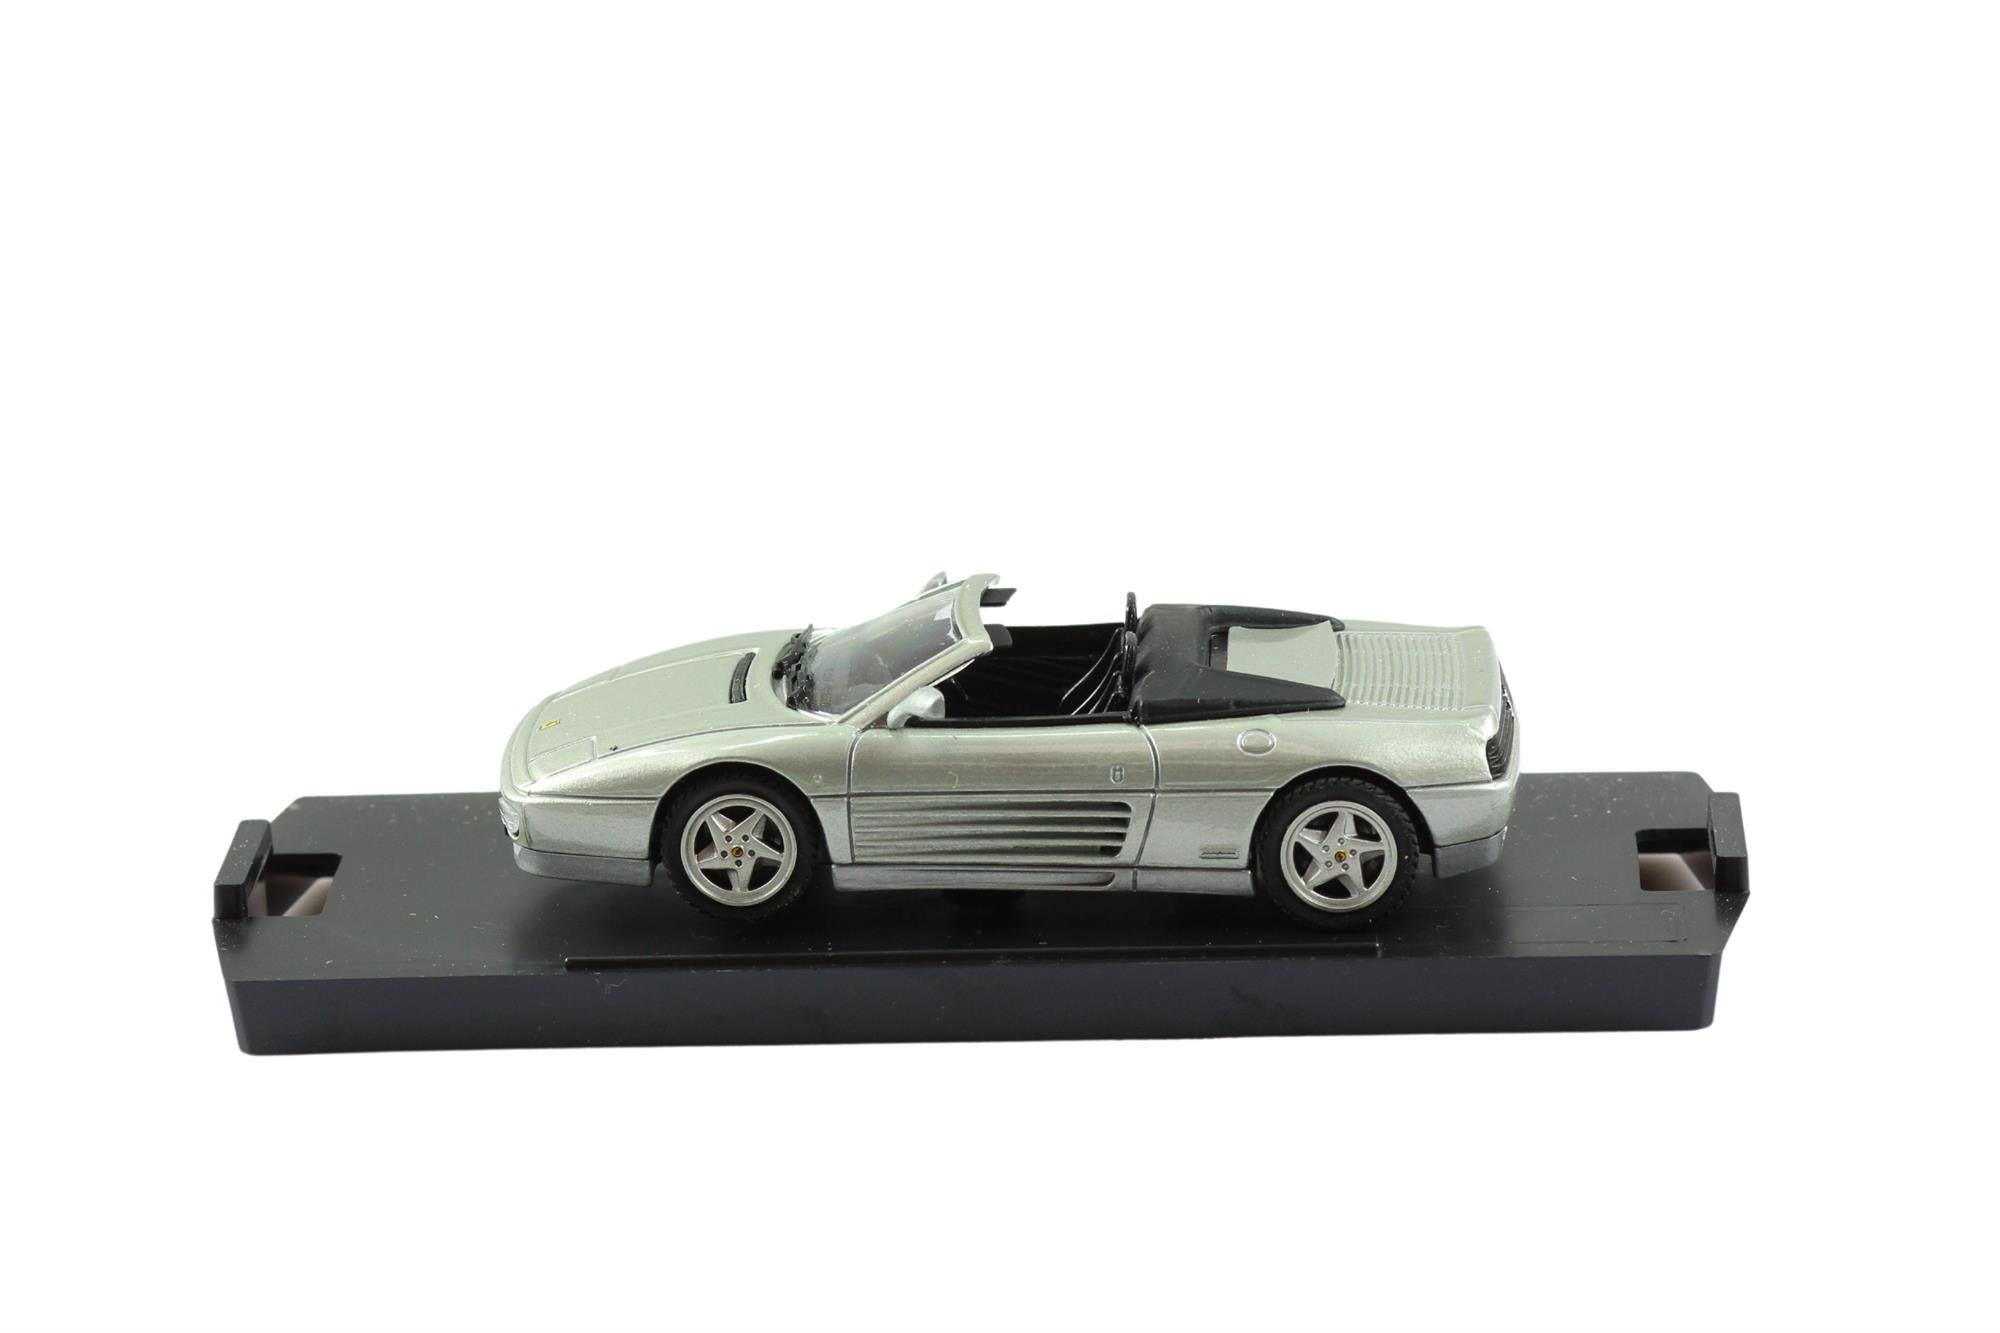 Bang Models - 1:43 Scale Diecast Ferrari 348 Spider Metallic Grey - Toptoys2u